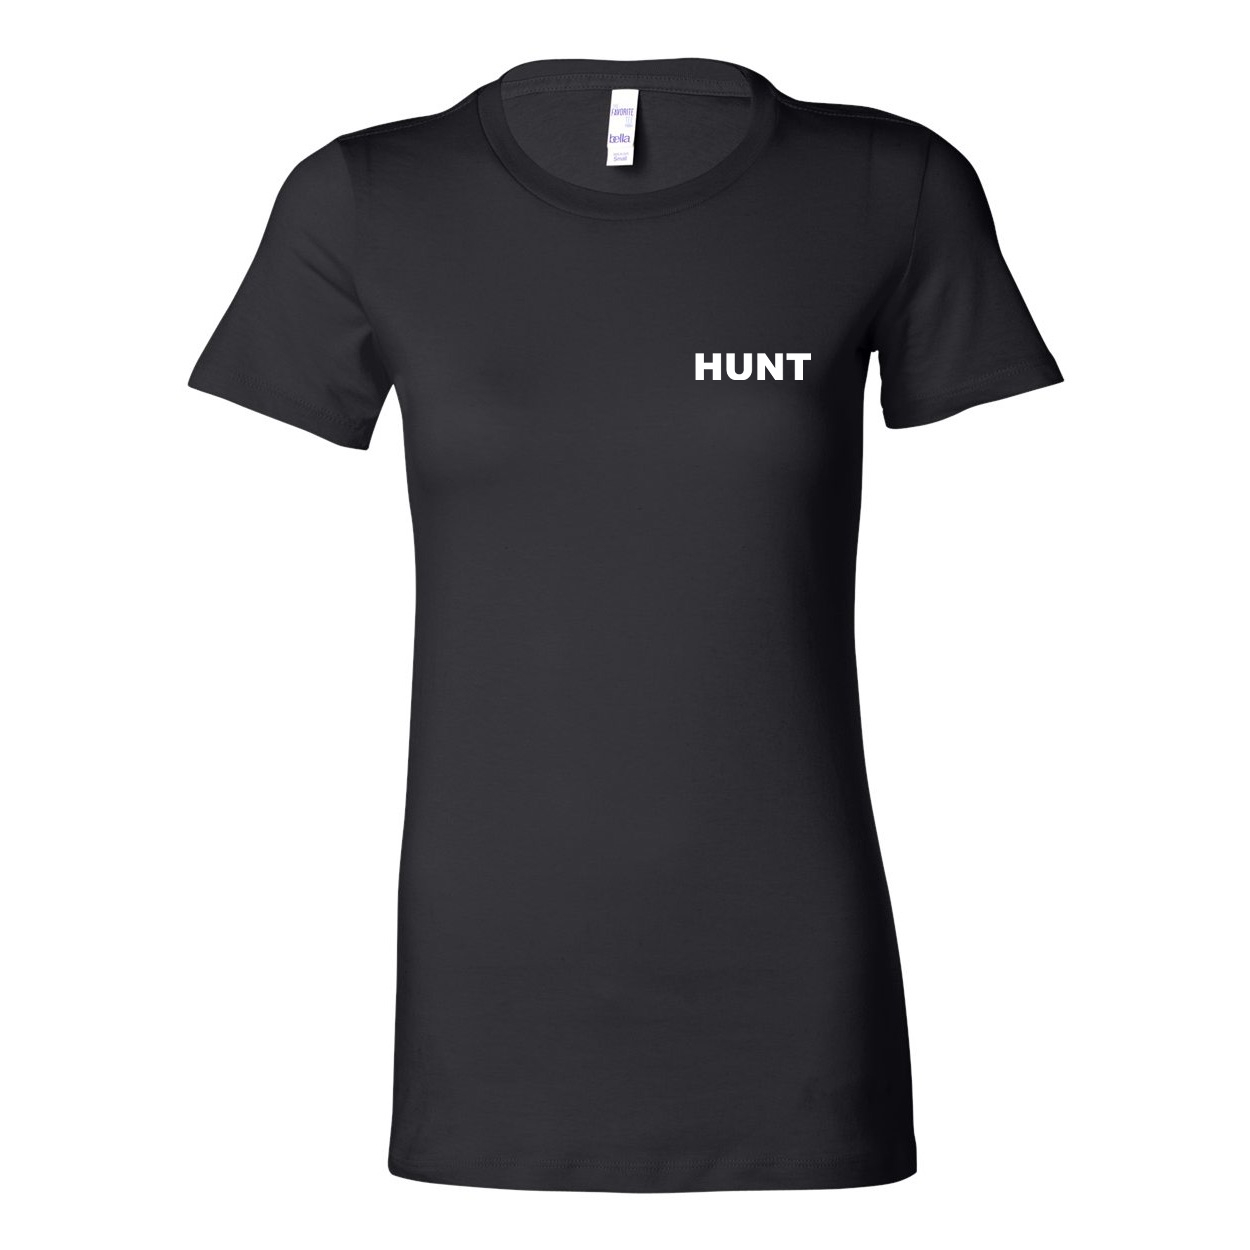 Hunt Brand Logo Women's Night Out Fitted Tri-Blend T-Shirt Black (White Logo)